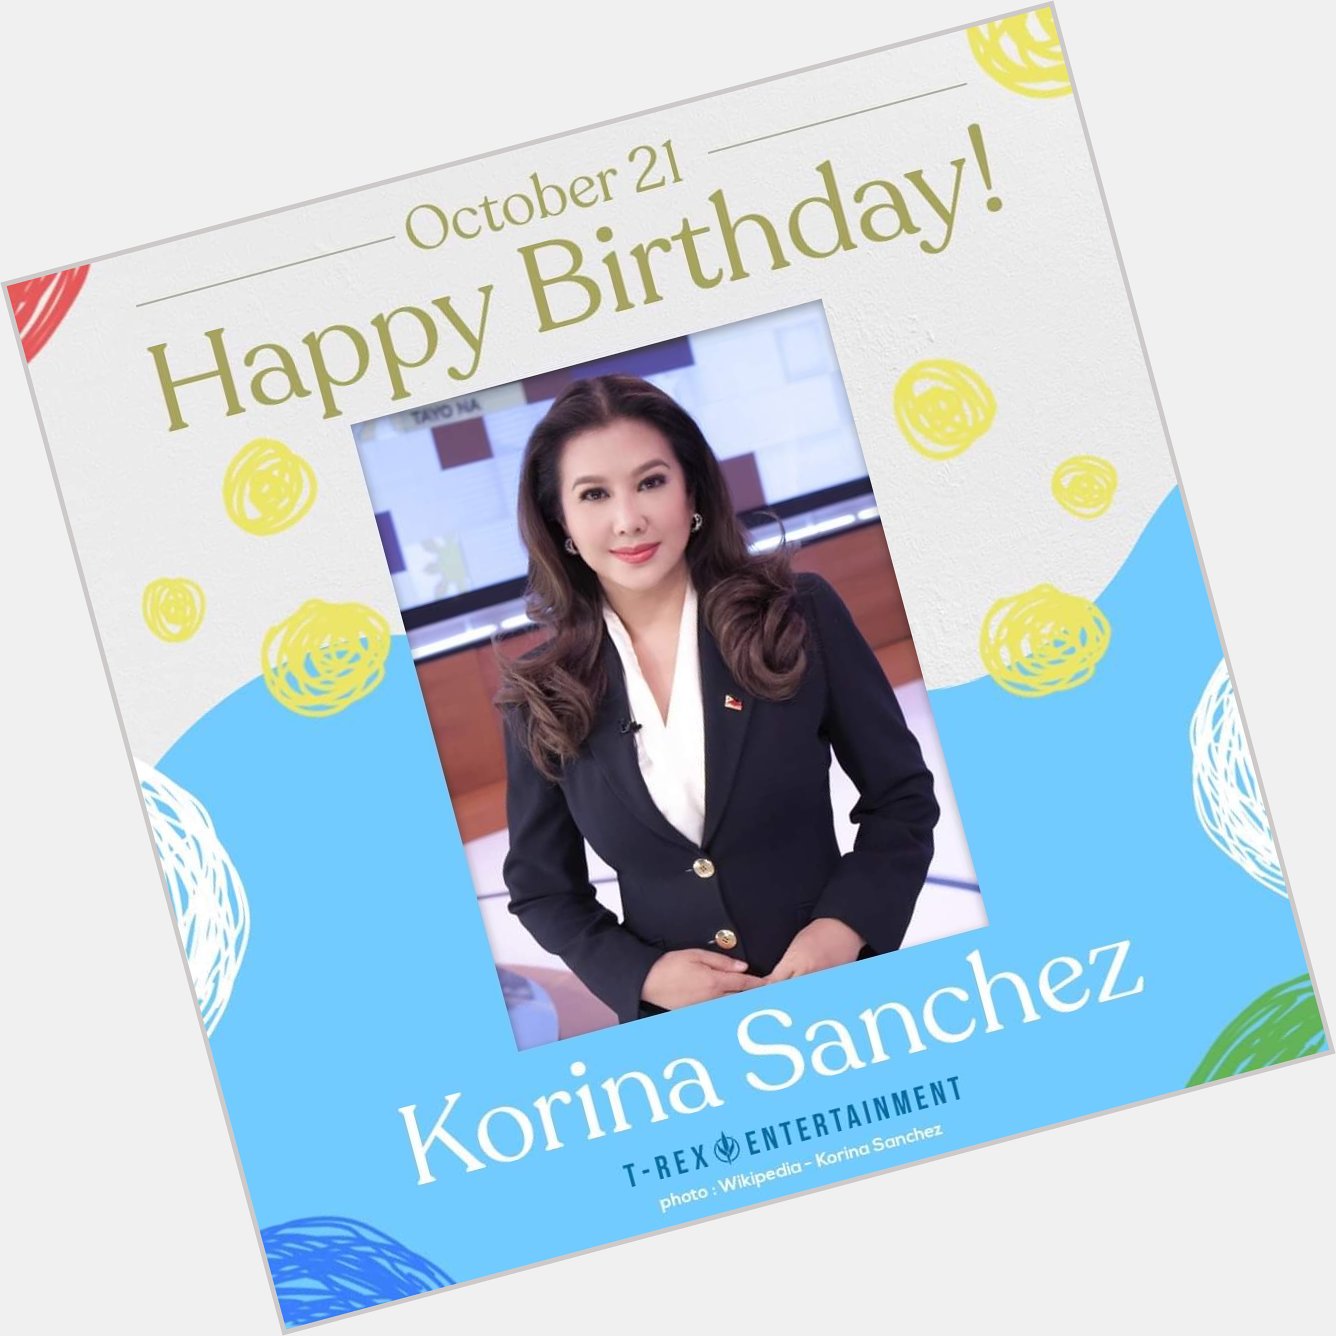 Wishing Korina Sanchez-Roxas a happy 56th birthday! 